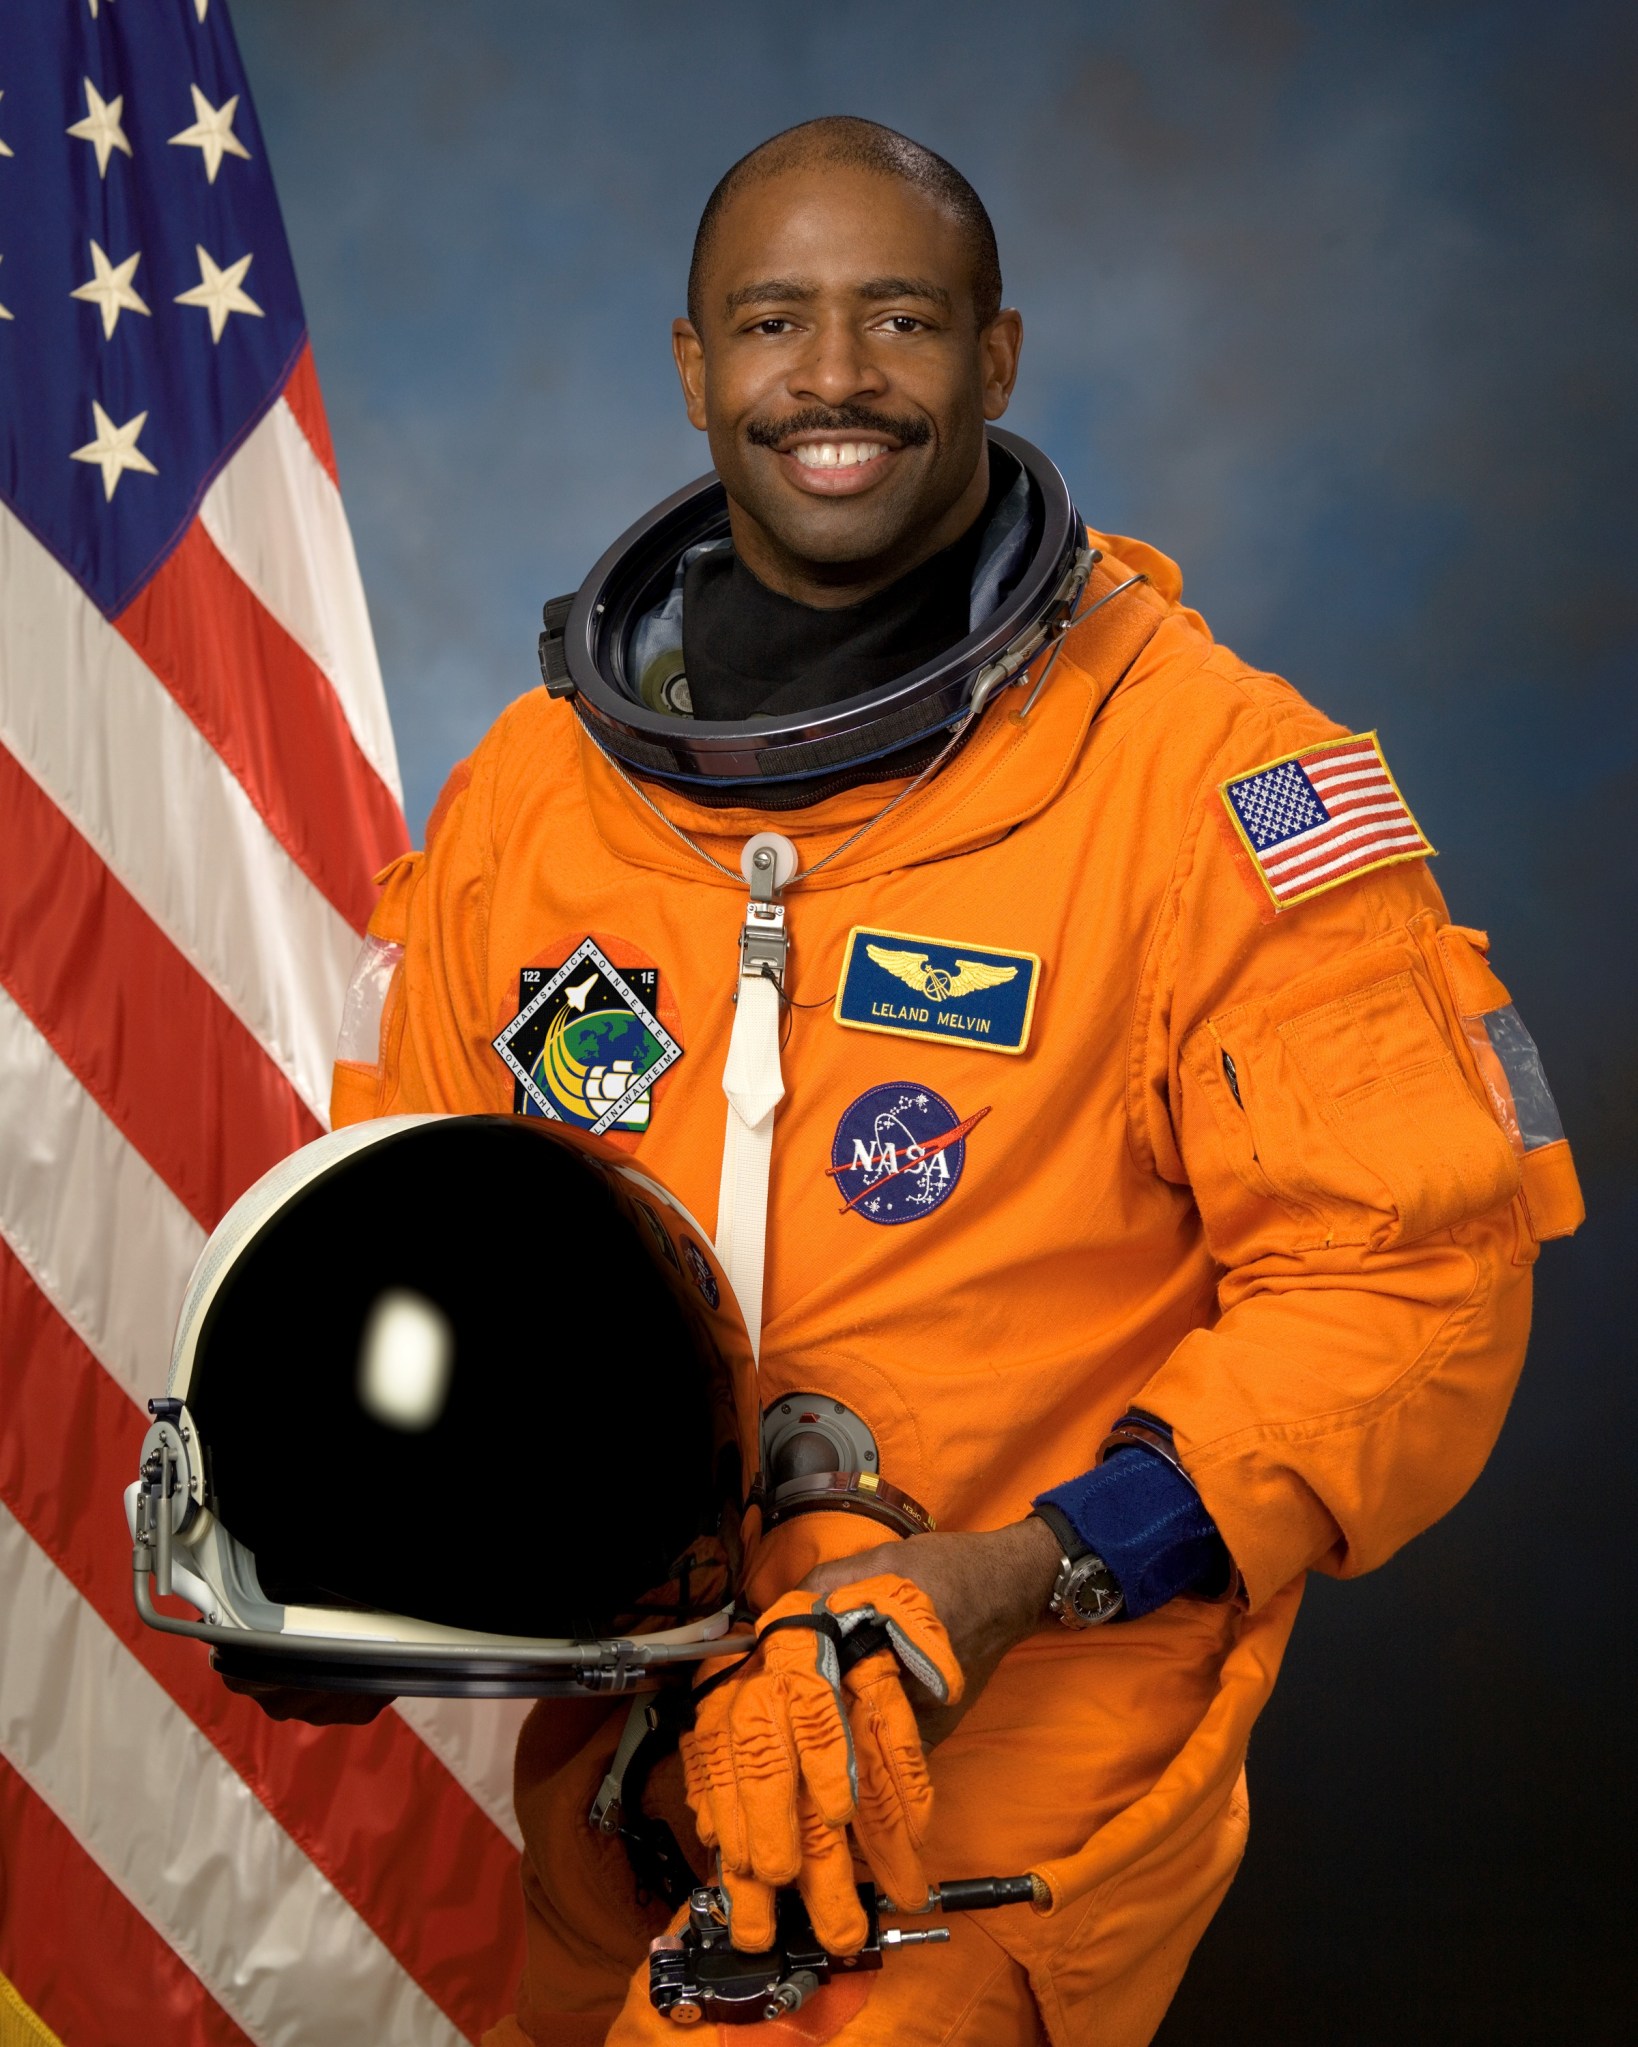 Former NASA Astronaut Leland Melvin to Speak at Marshall’s Black History Month Event Feb. 23; Media Invited